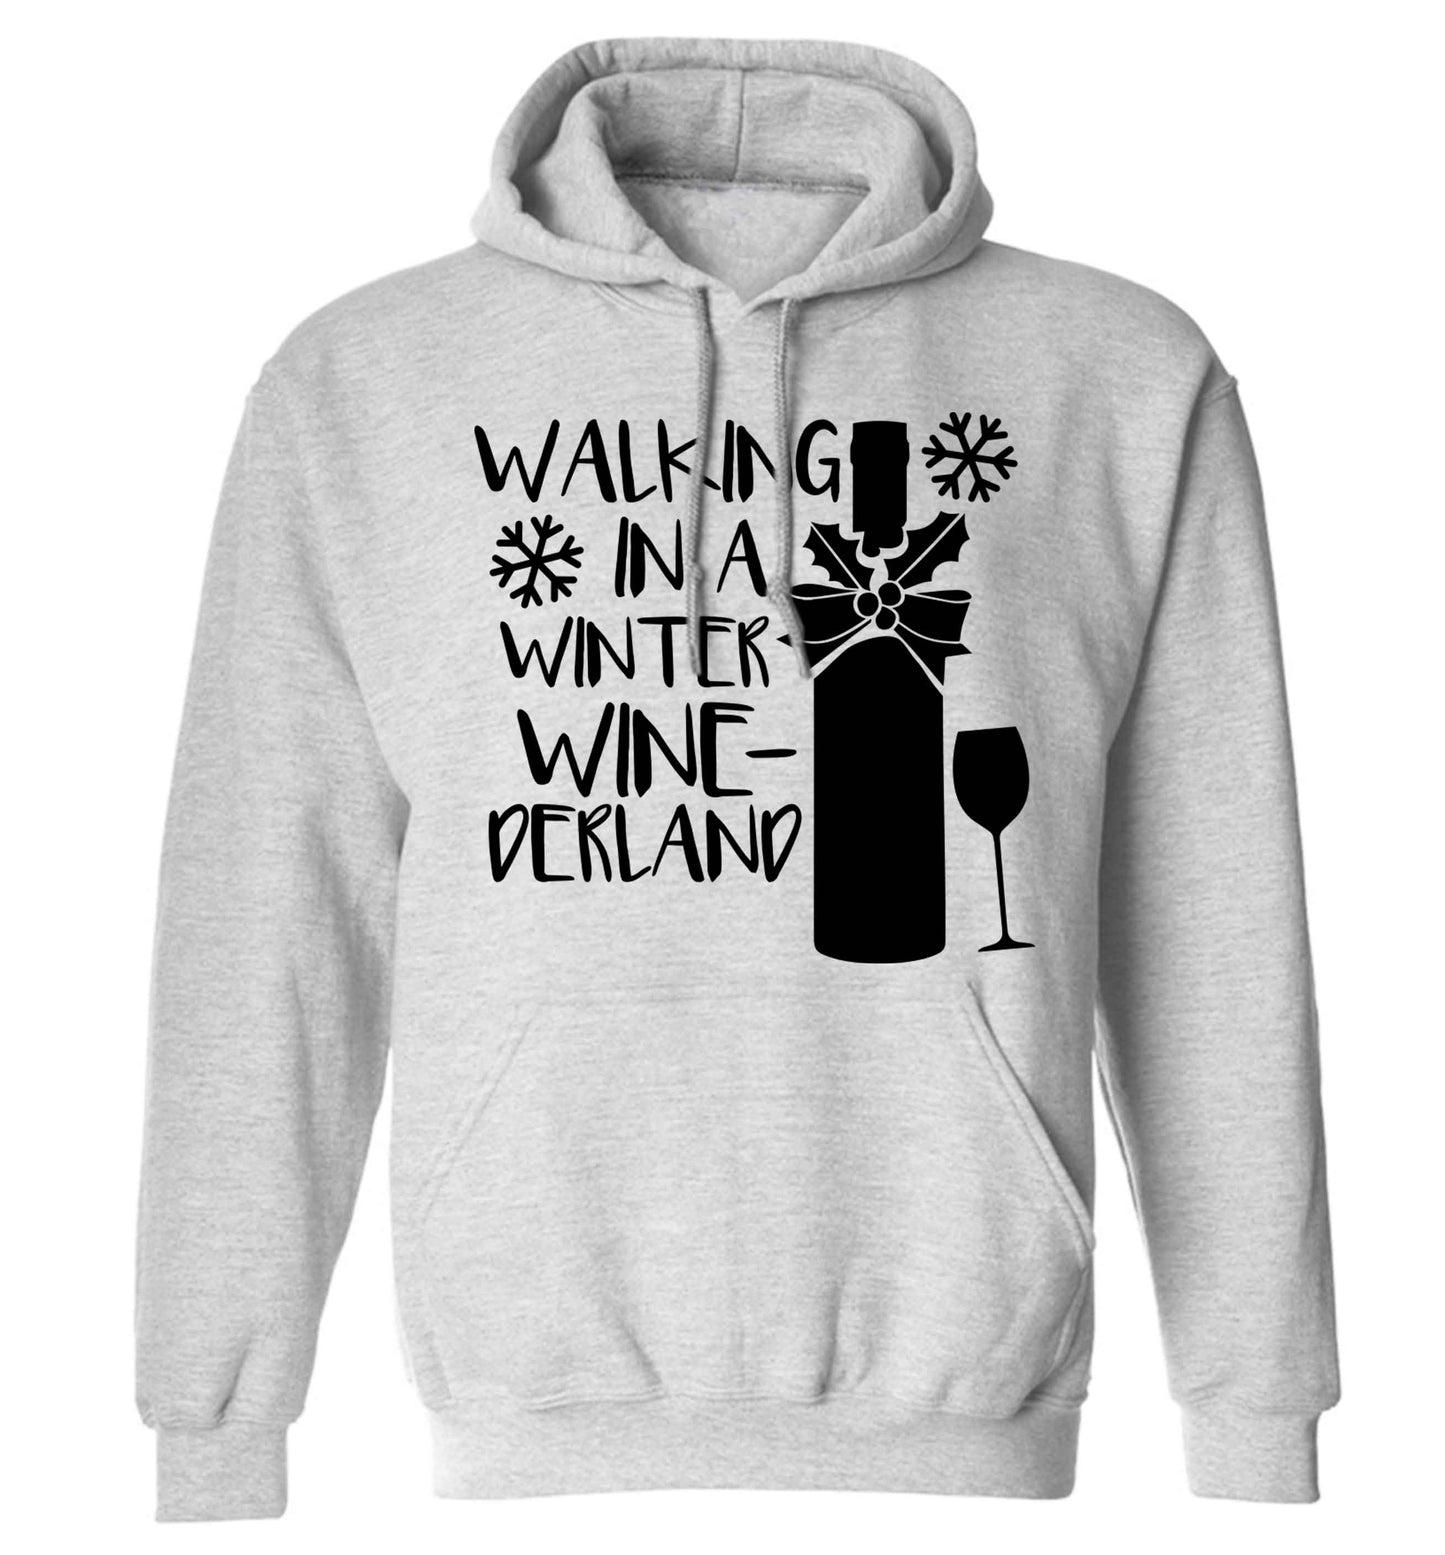 Walking in a wine-derwonderland adults unisex grey hoodie 2XL